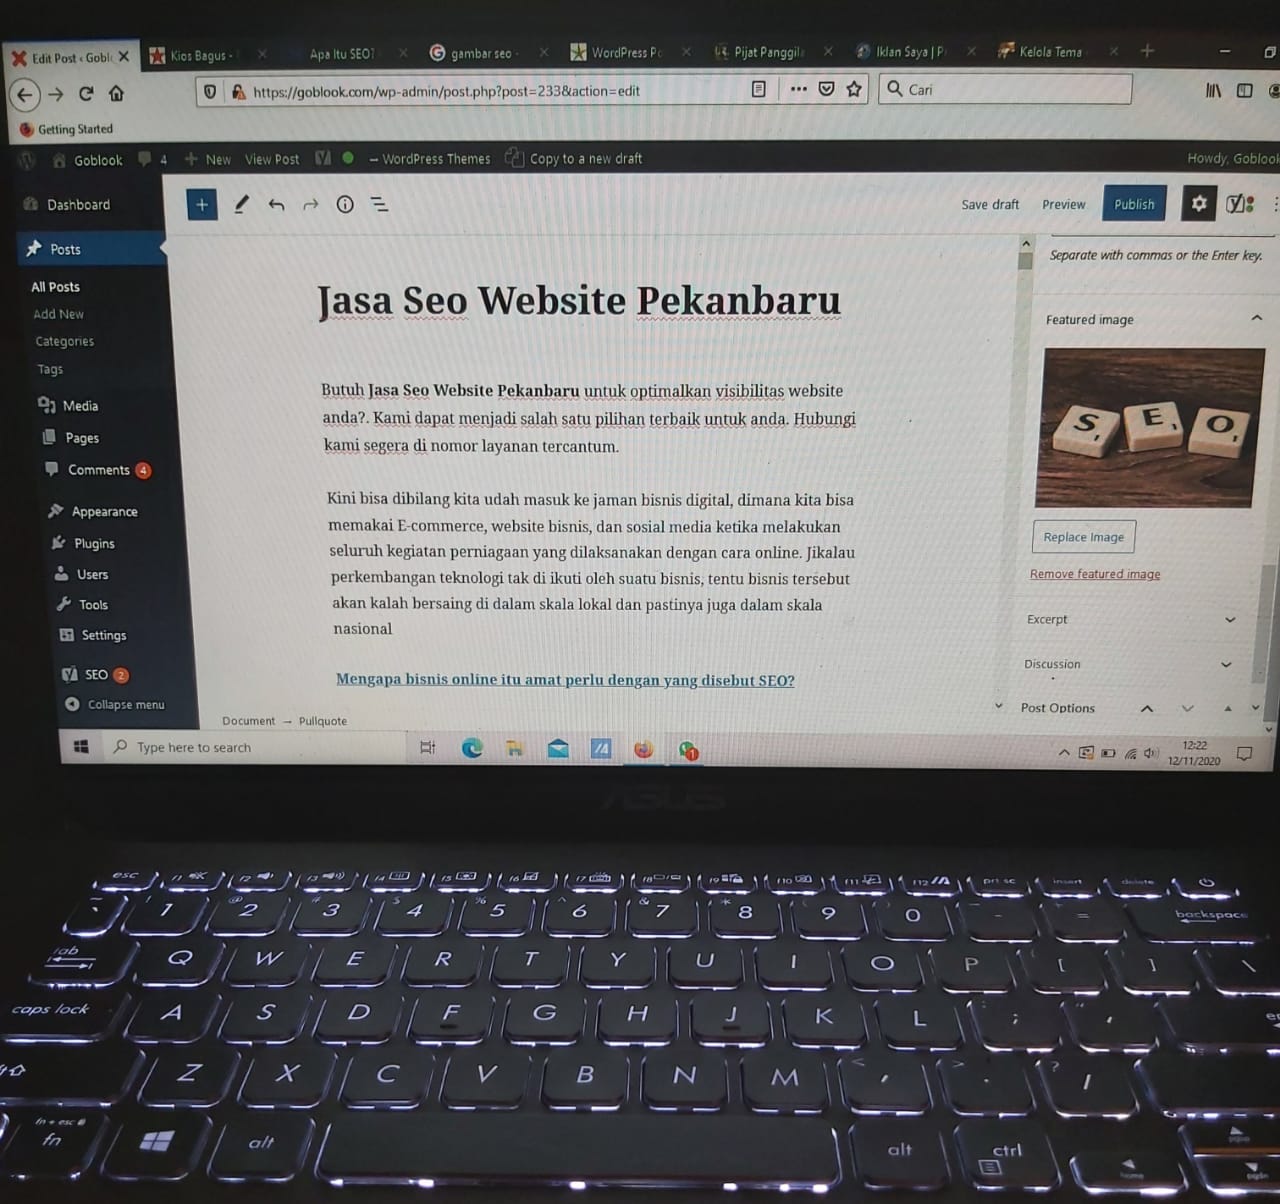 Jasa Seo Website Pekanbaru